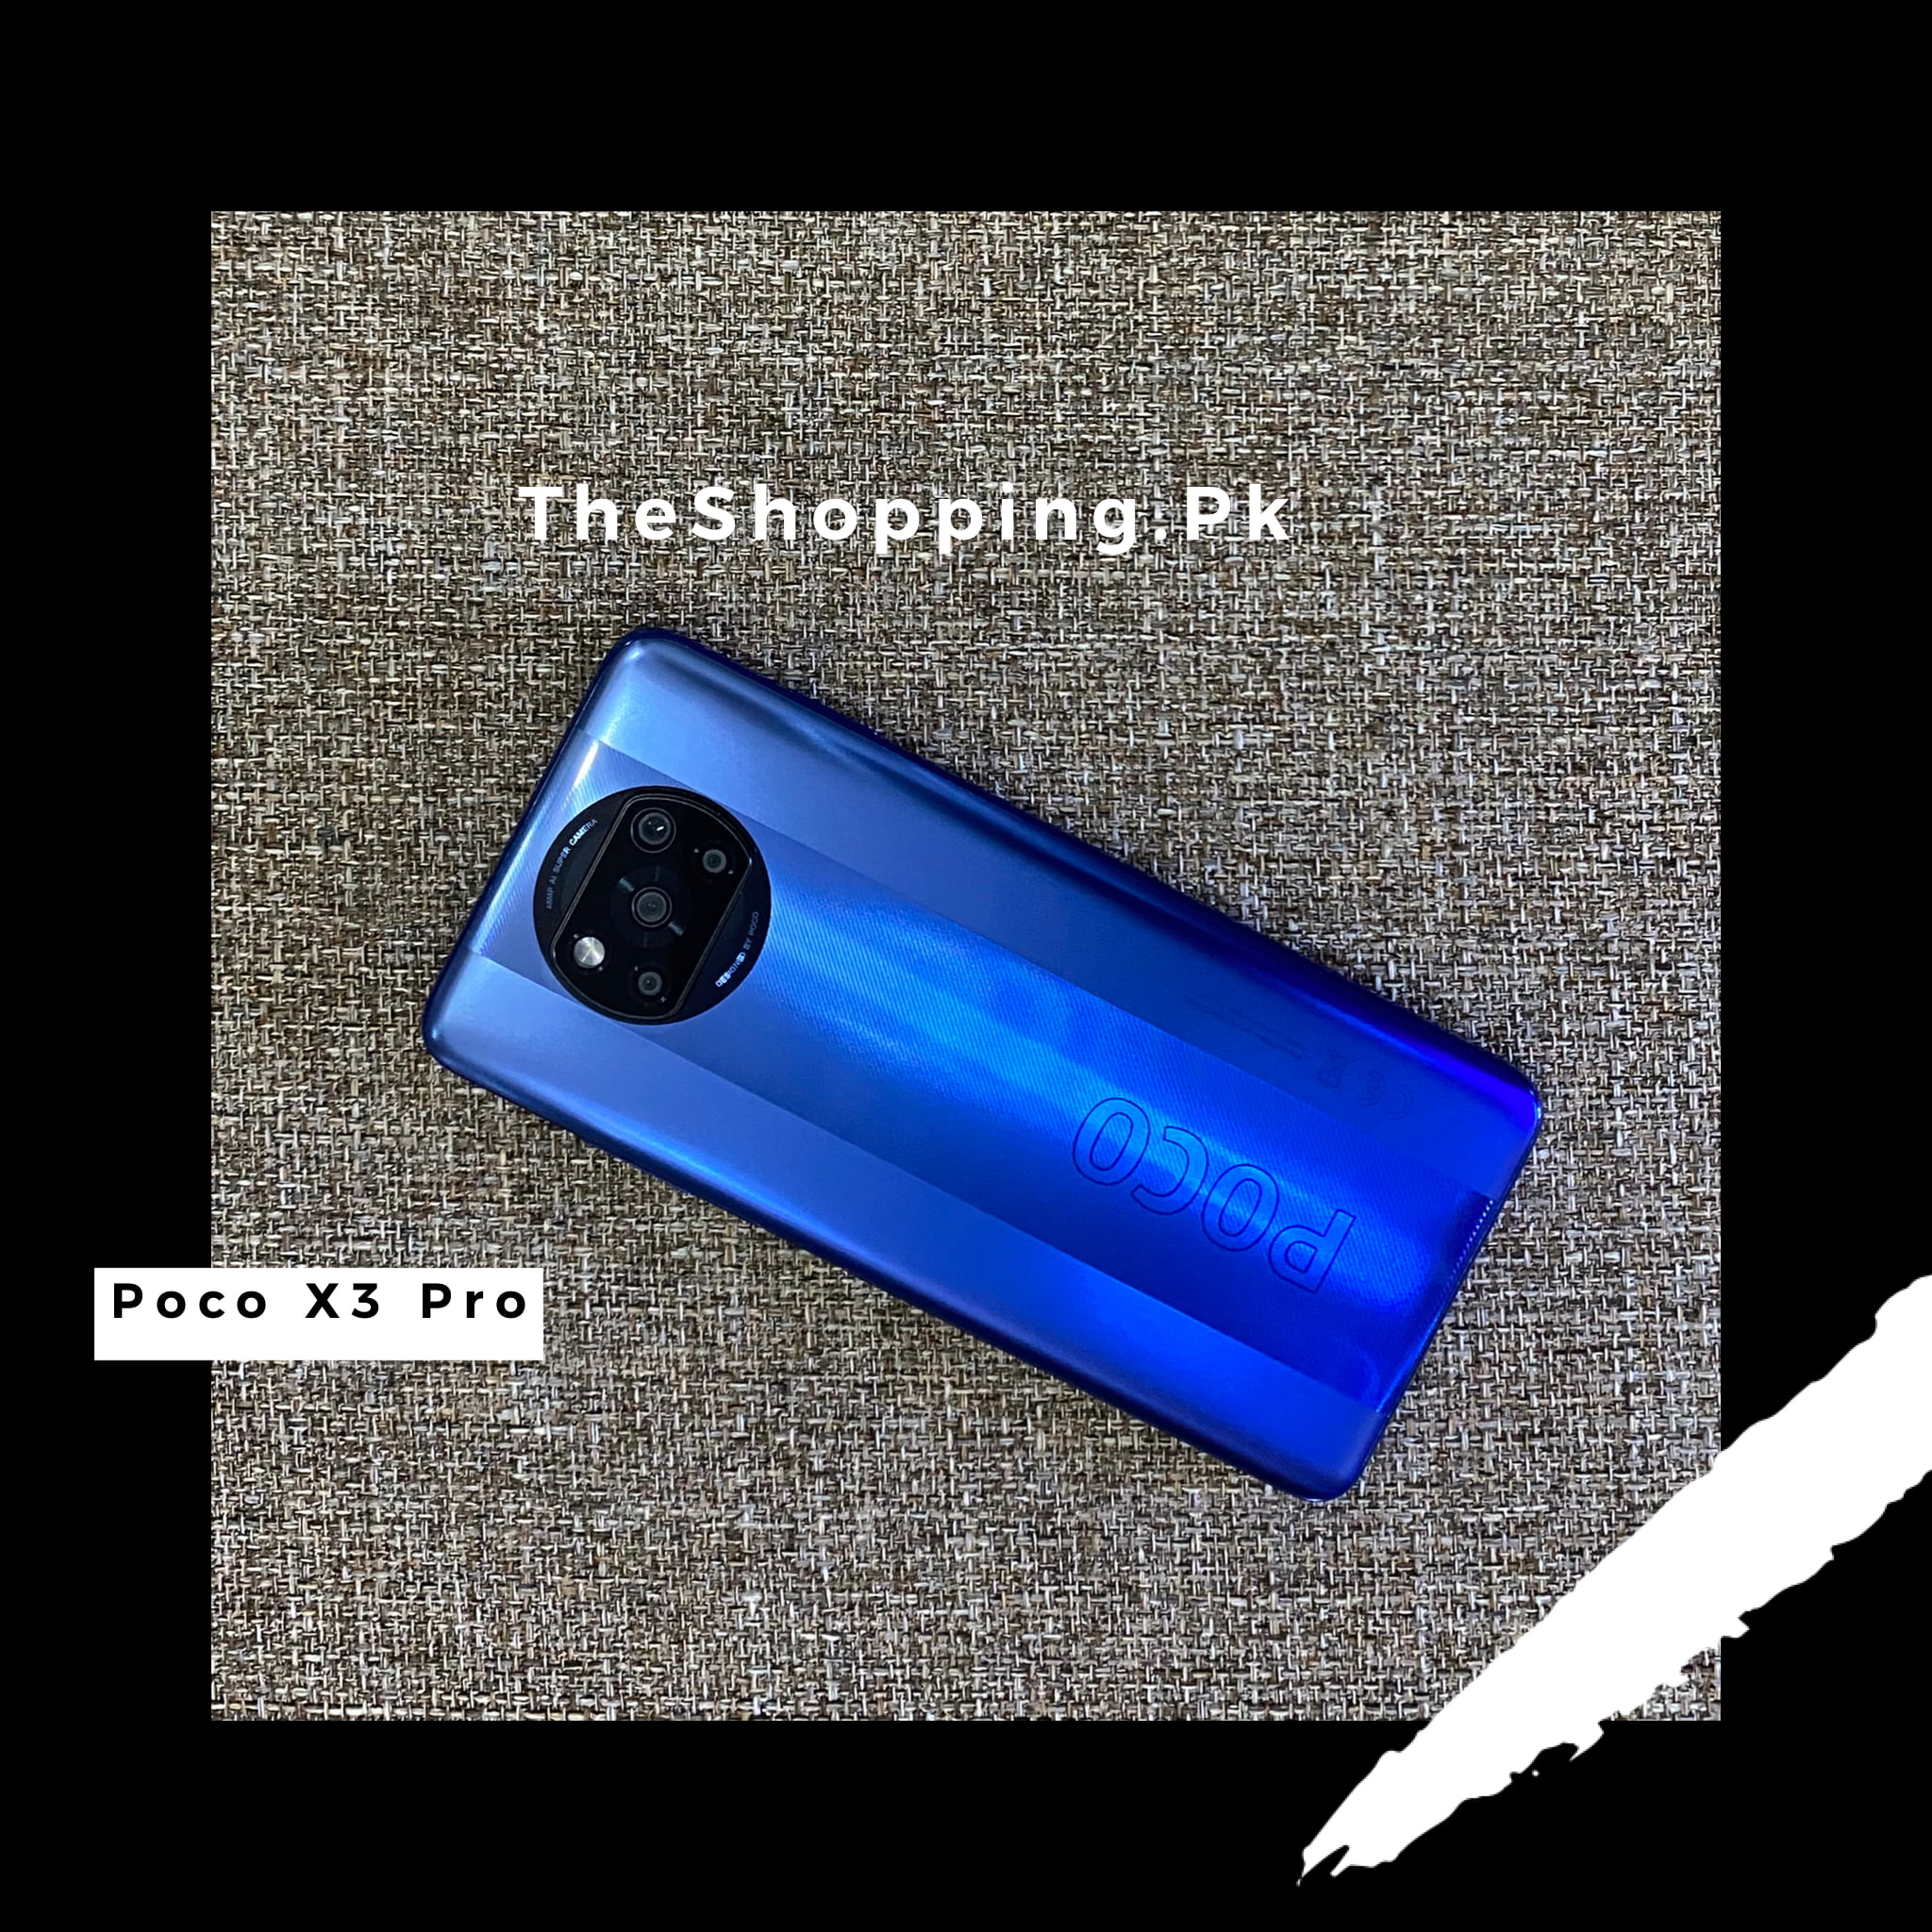 Poco X3 Pro 6GB 128GB - The Shopping